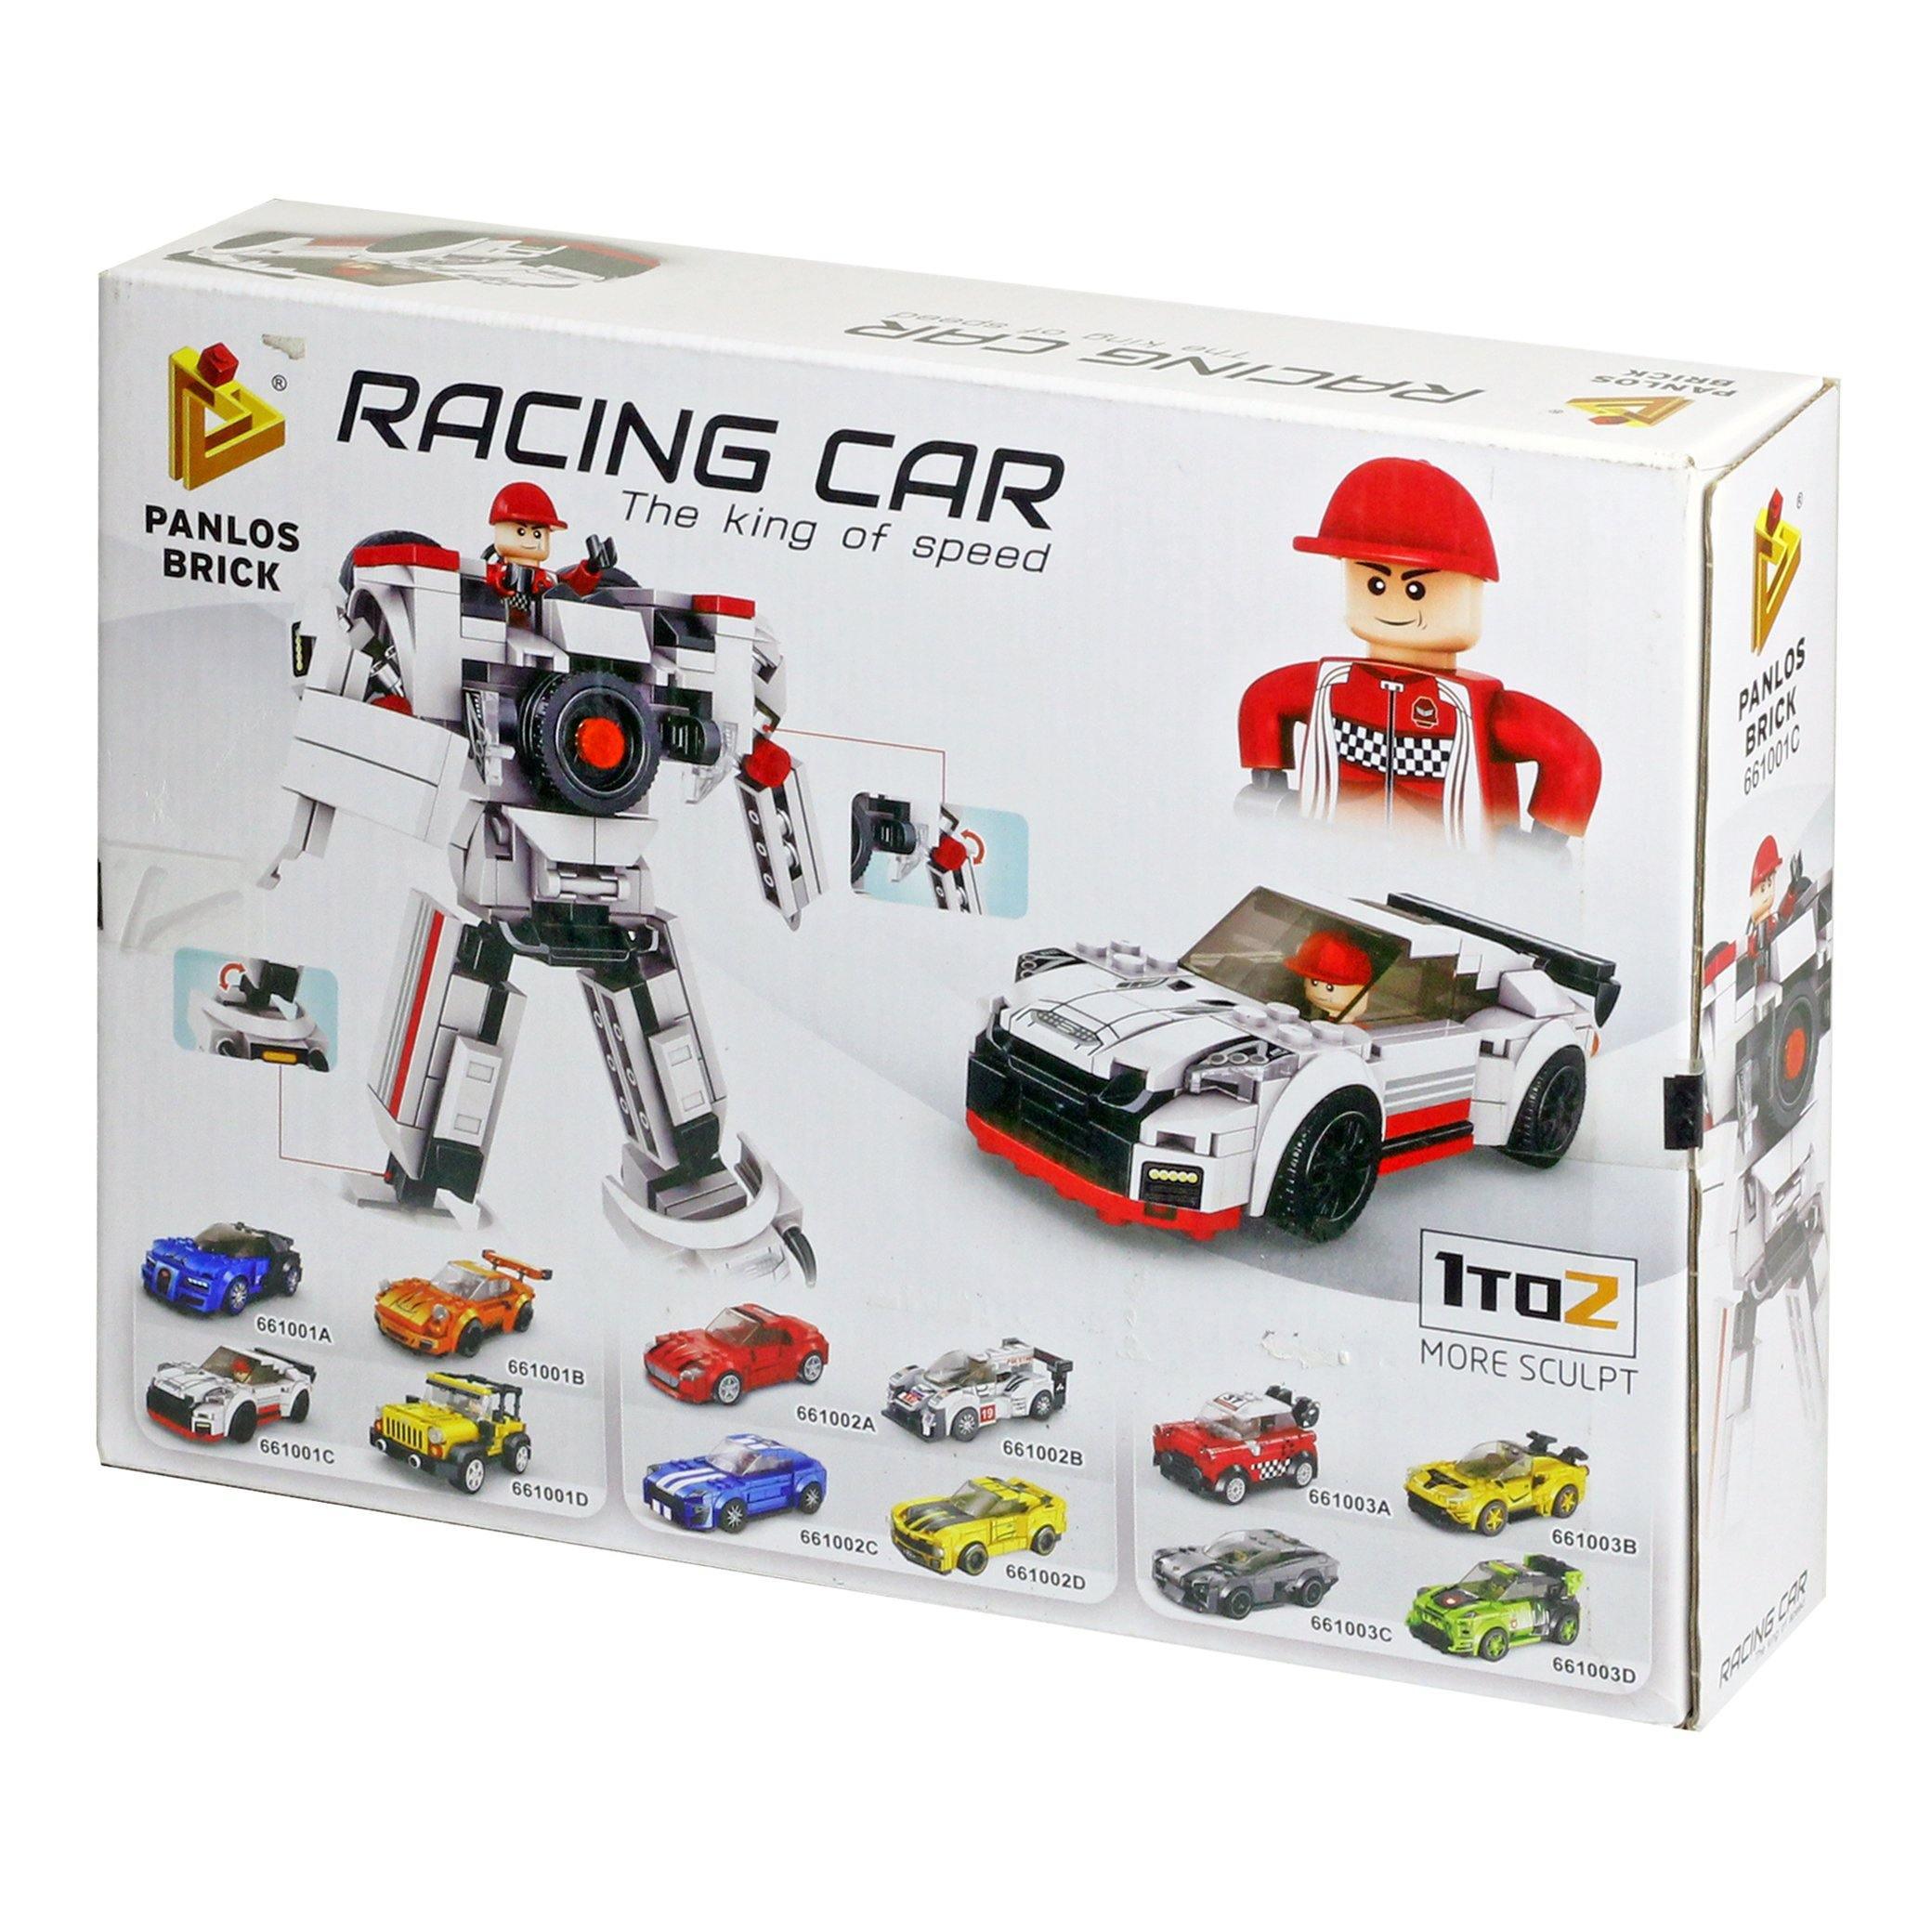 Panlos Brick Racing Car Building Blocks 242 Pieces - BumbleToys - 5-7 Years, Boys, LEGO, Toy Land